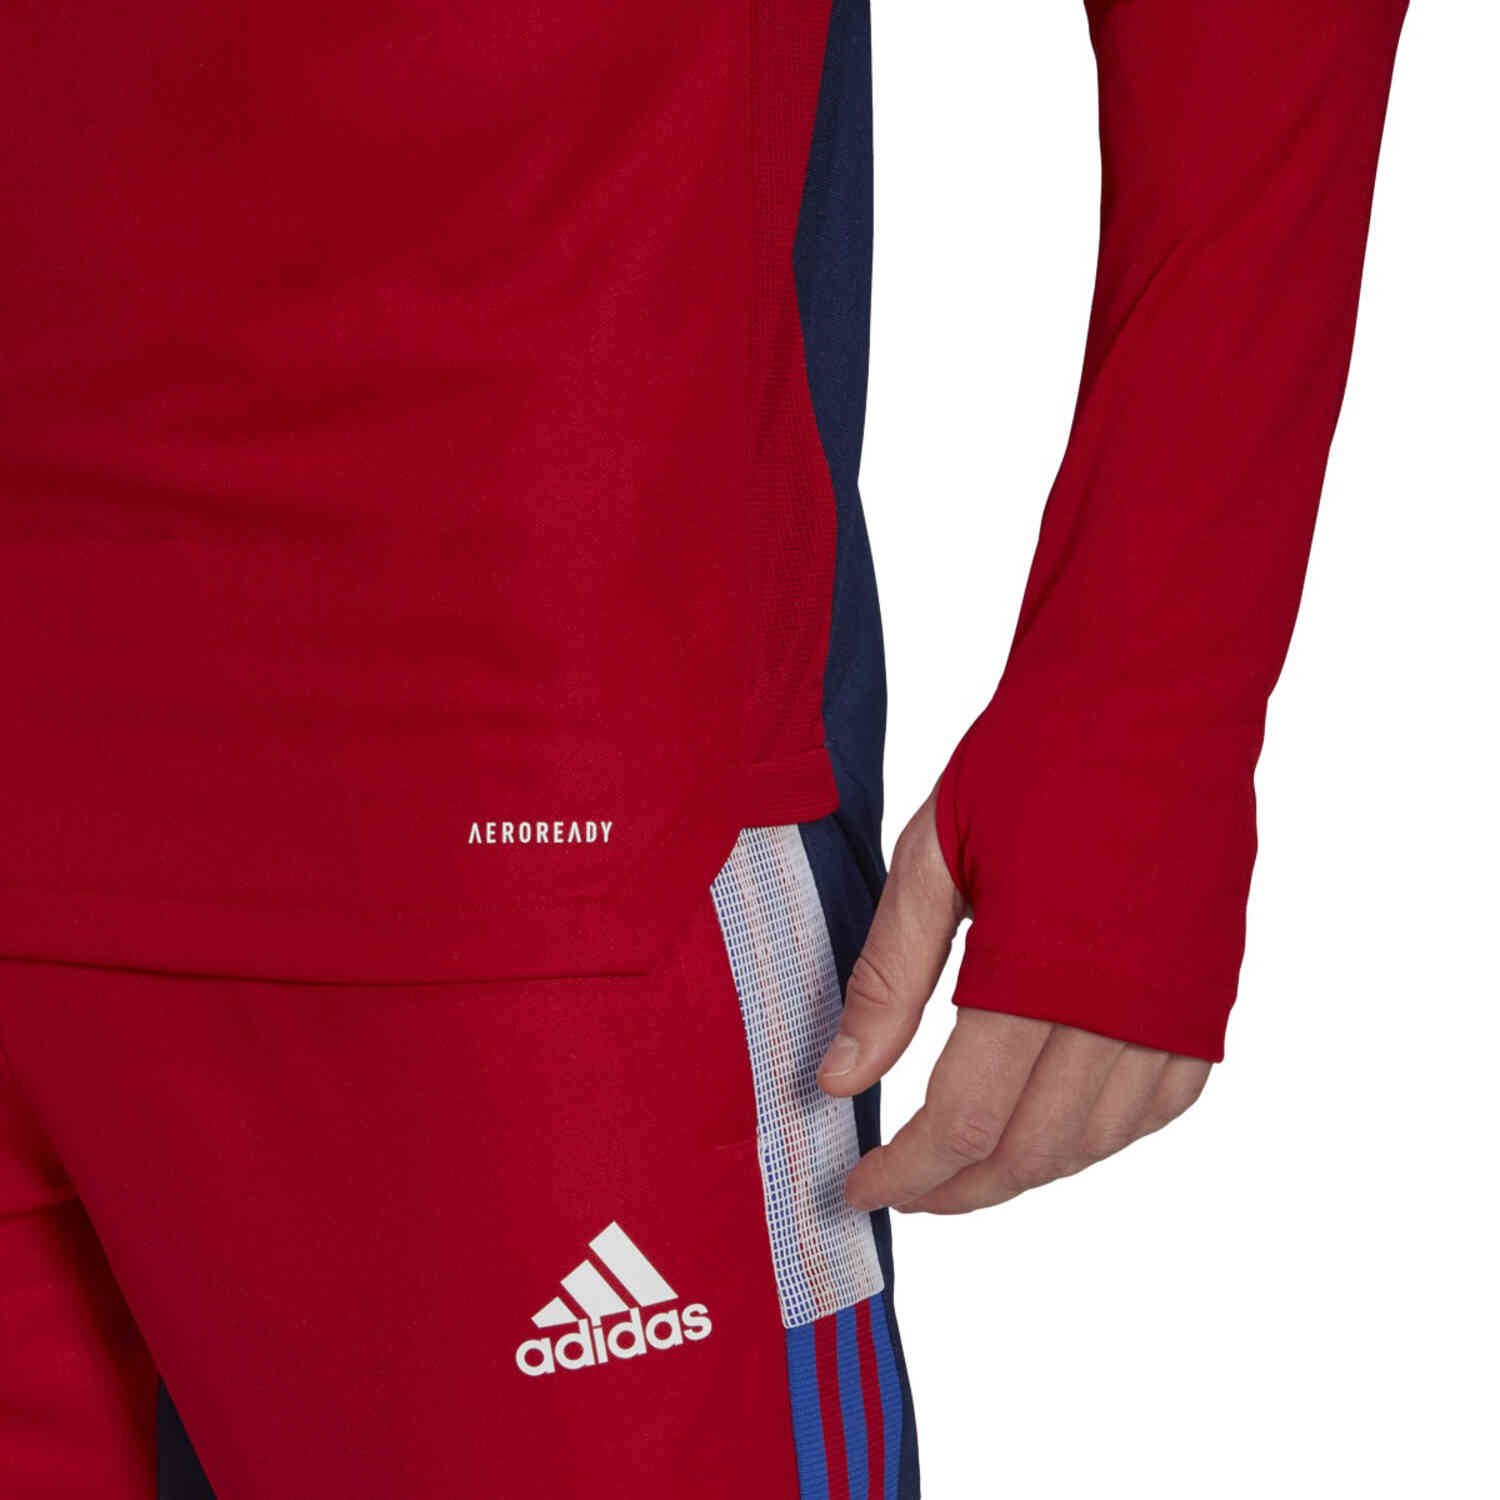 testigo Encadenar Resplandor adidas Human Race Bayern Munich 1/4 zip Training Top - FCB True Red/Dark  Blue - SoccerPro